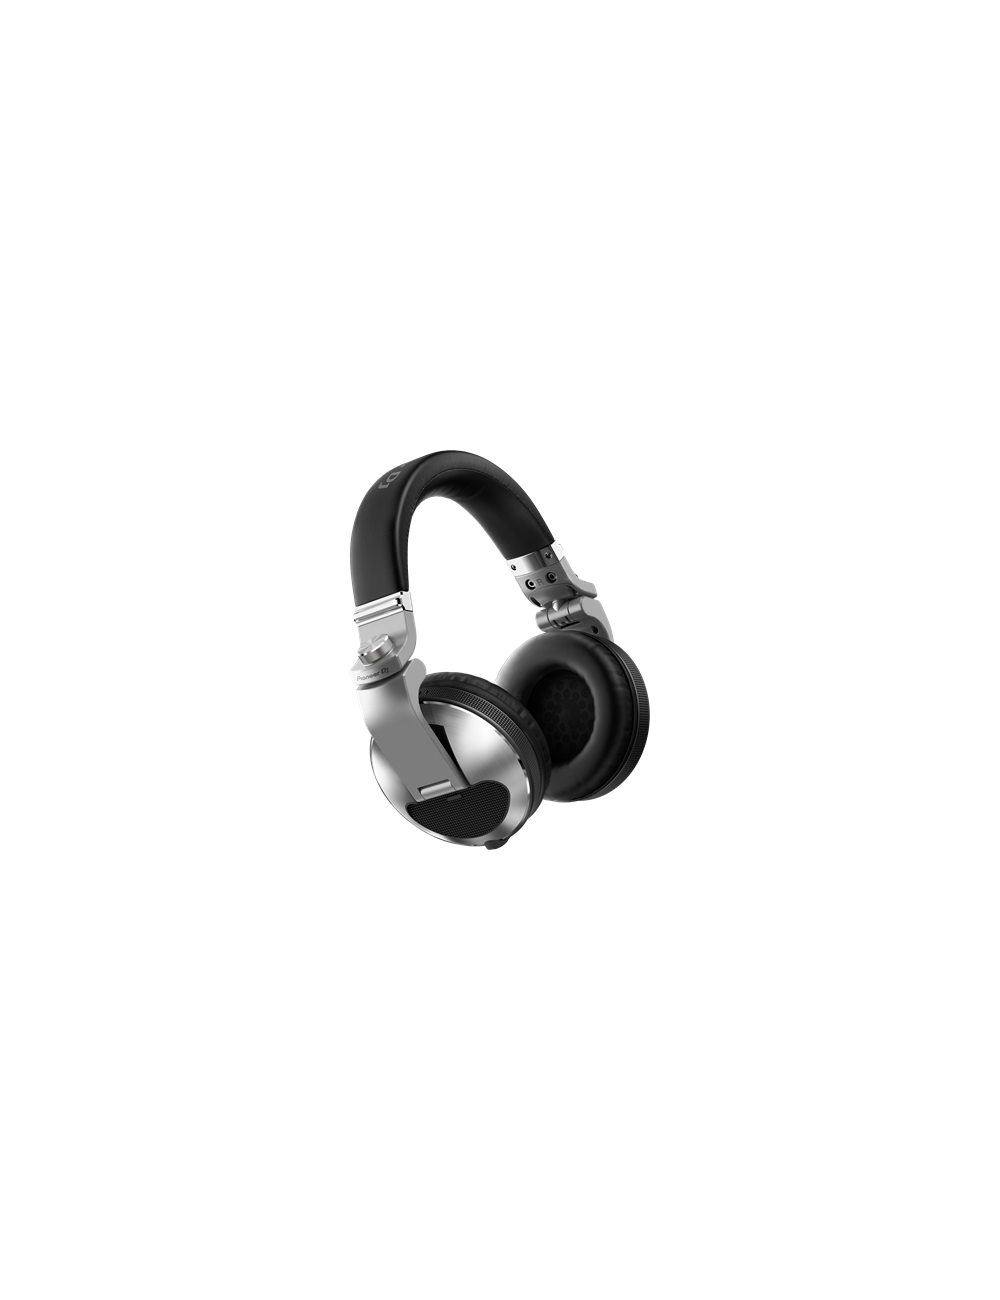 HDJ-X10-S-pioneer-dj-headphones